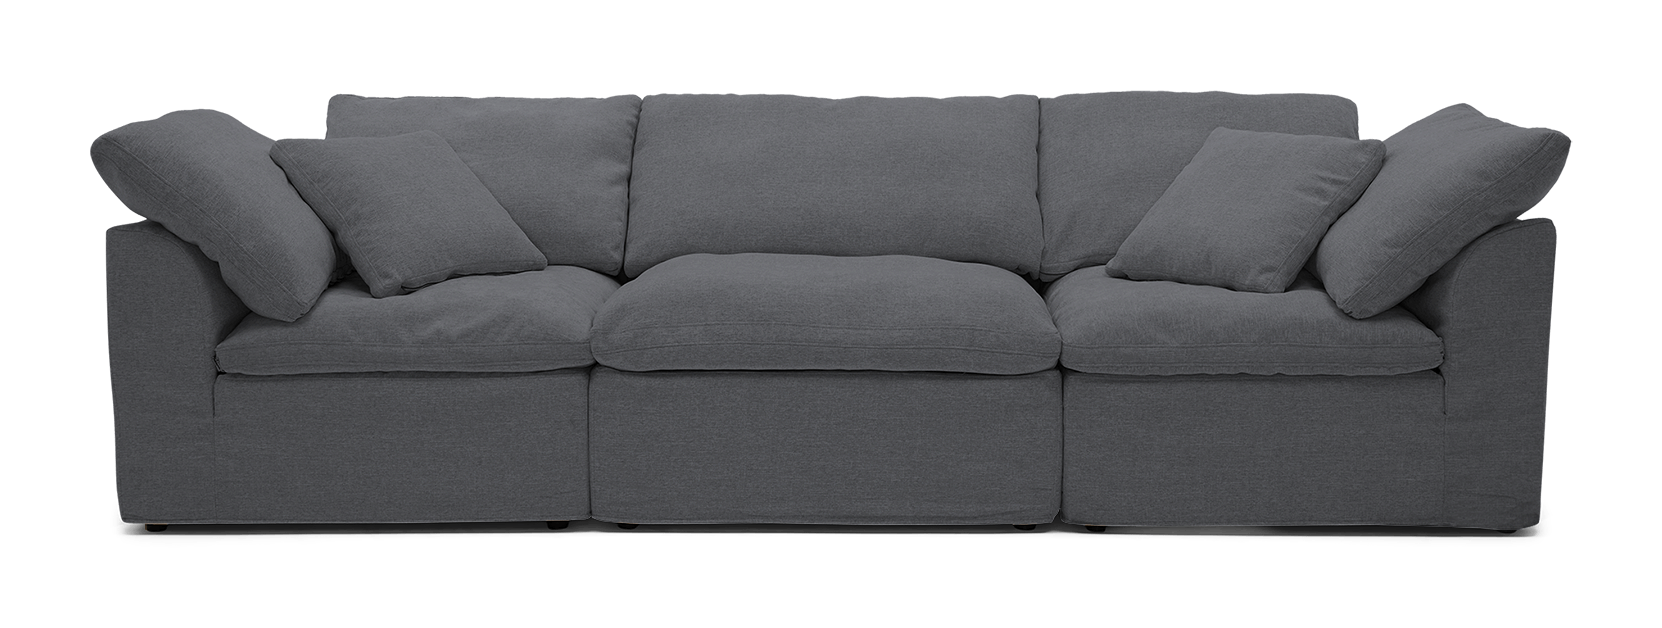 bryant slipcovered modular sofa essence ash